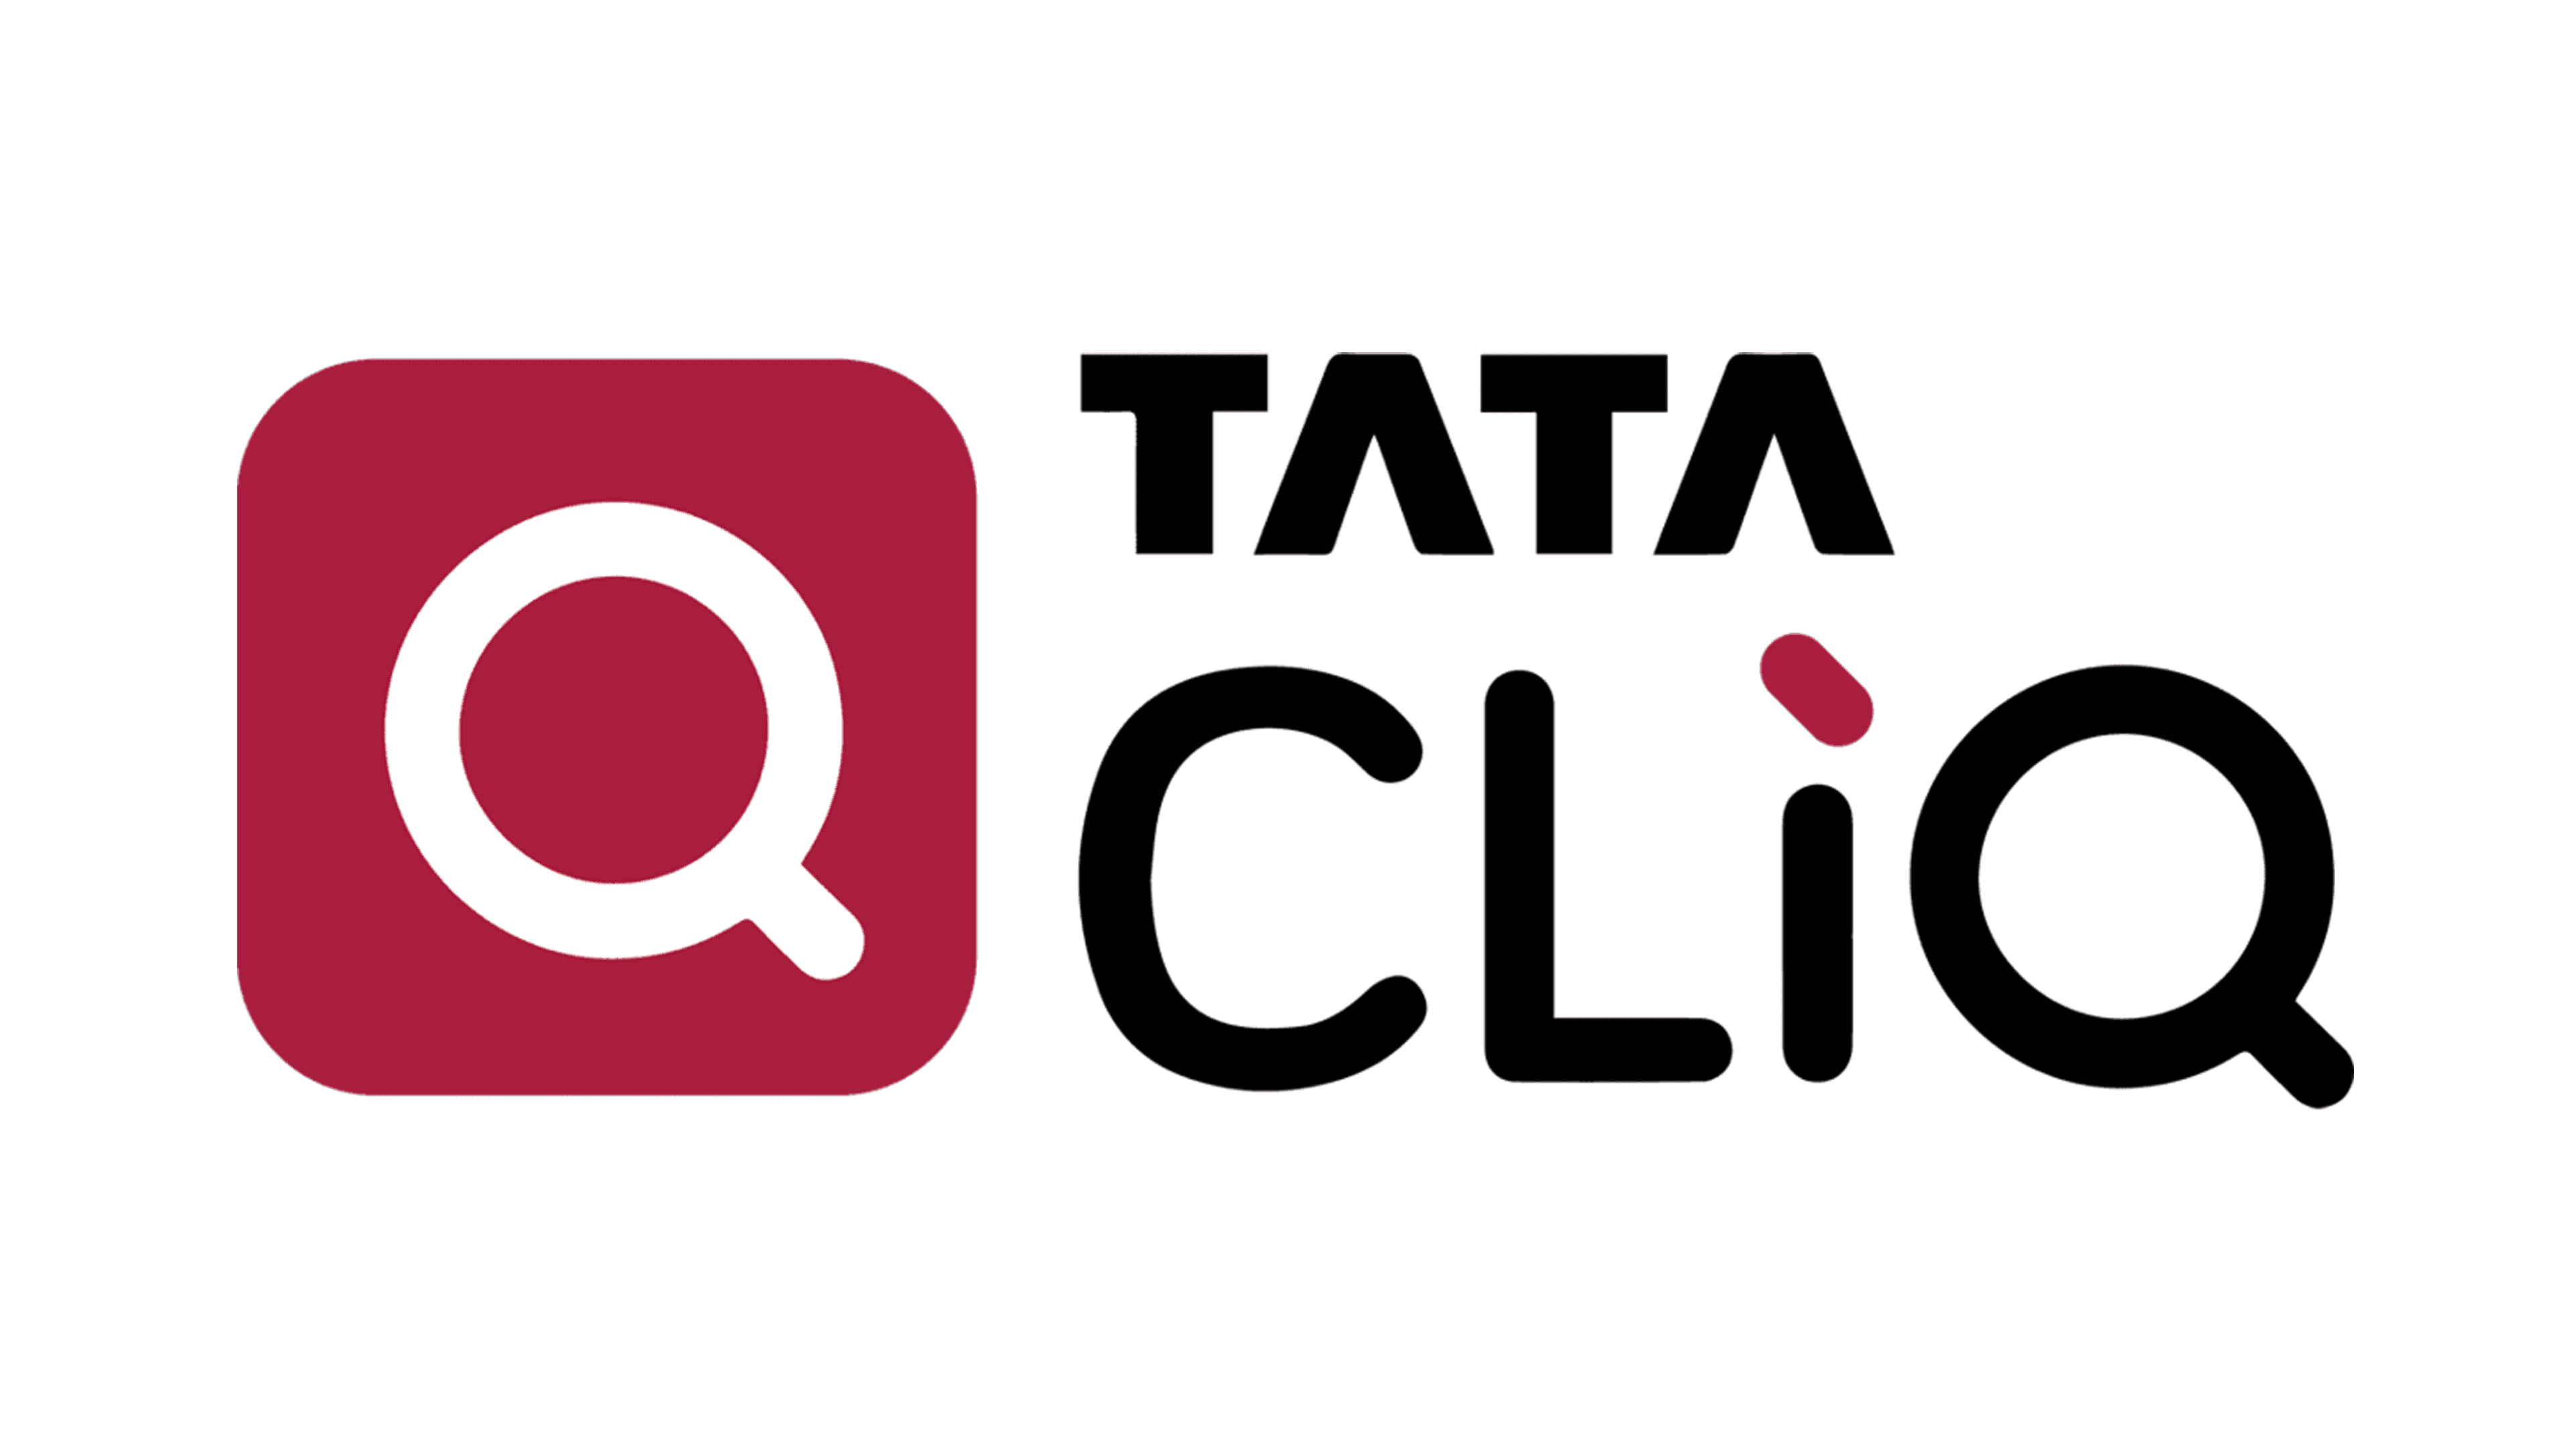 https://1000logos.net/wp-content/uploads/2021/05/Tata-Cliq-logo.png